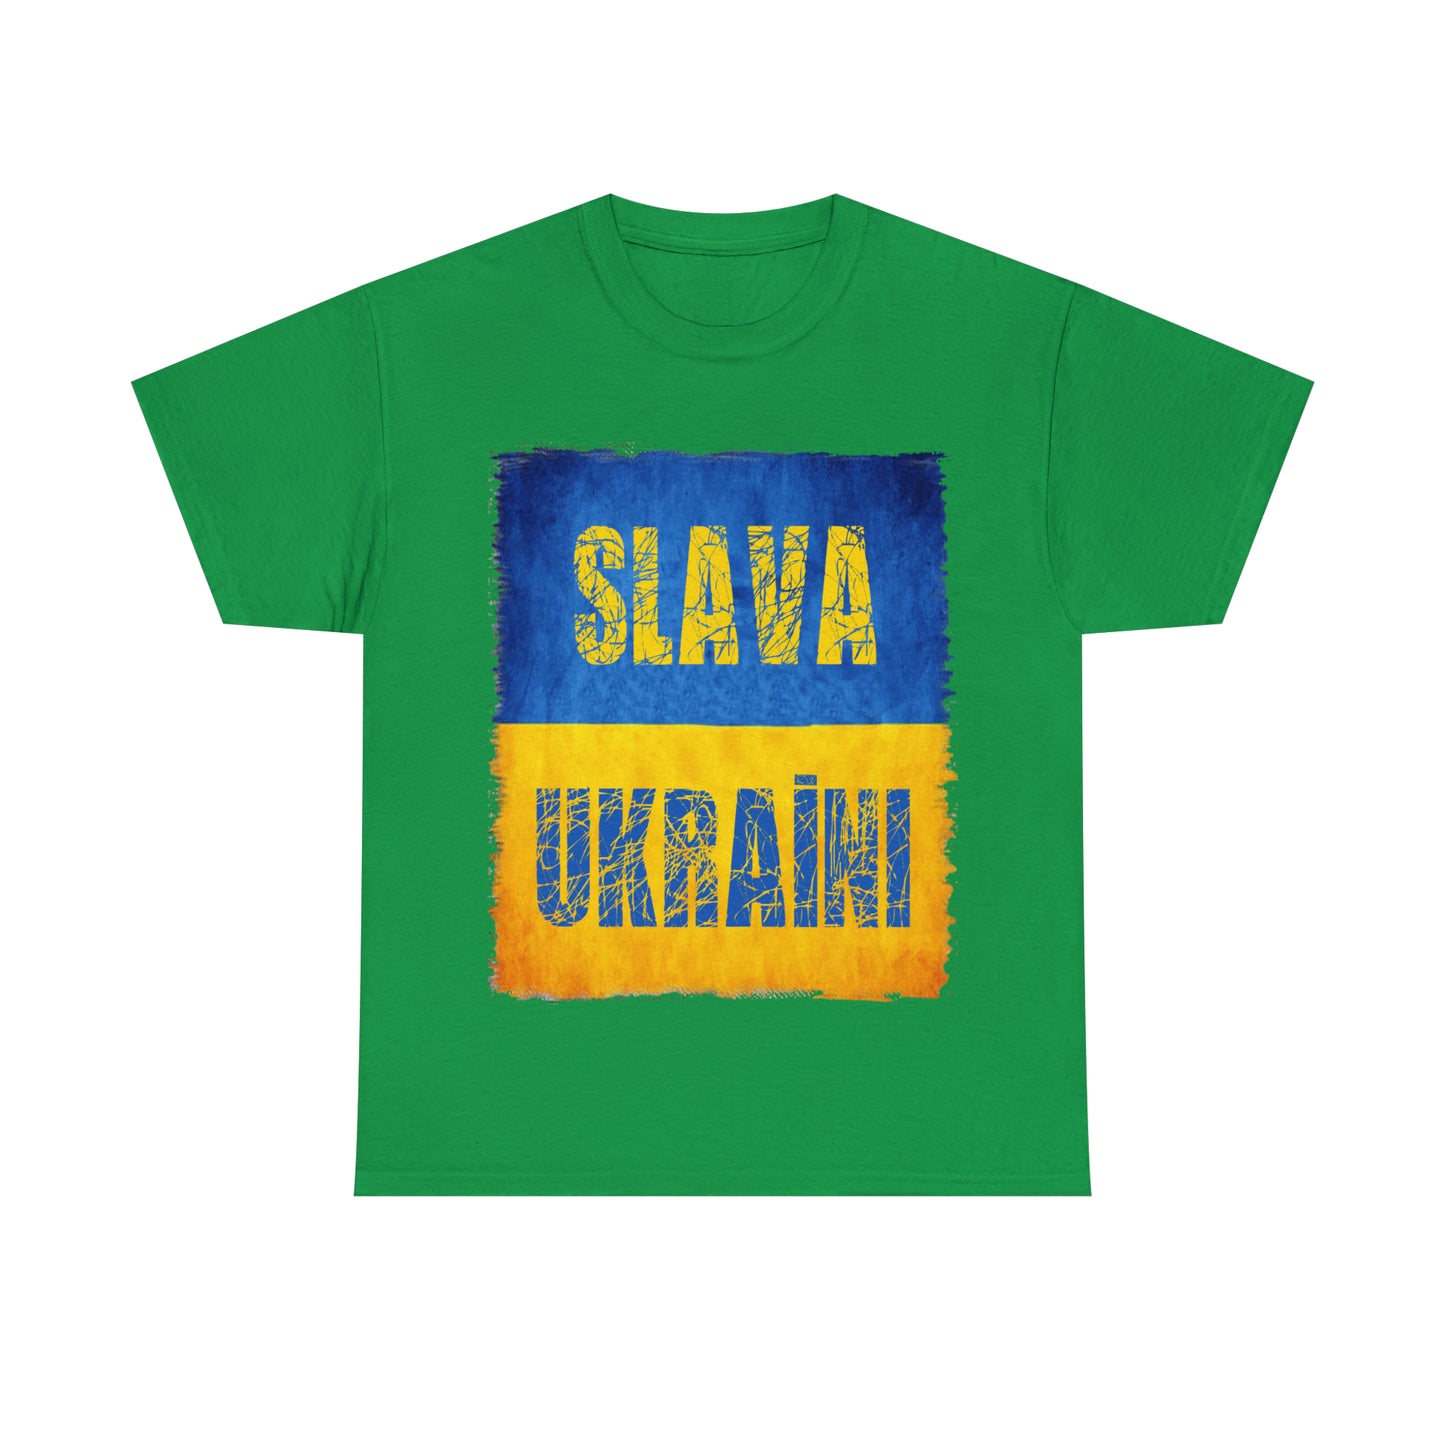 "SLAVA UKRAINI" FLAG - Unisex Heavy Cotton Tee